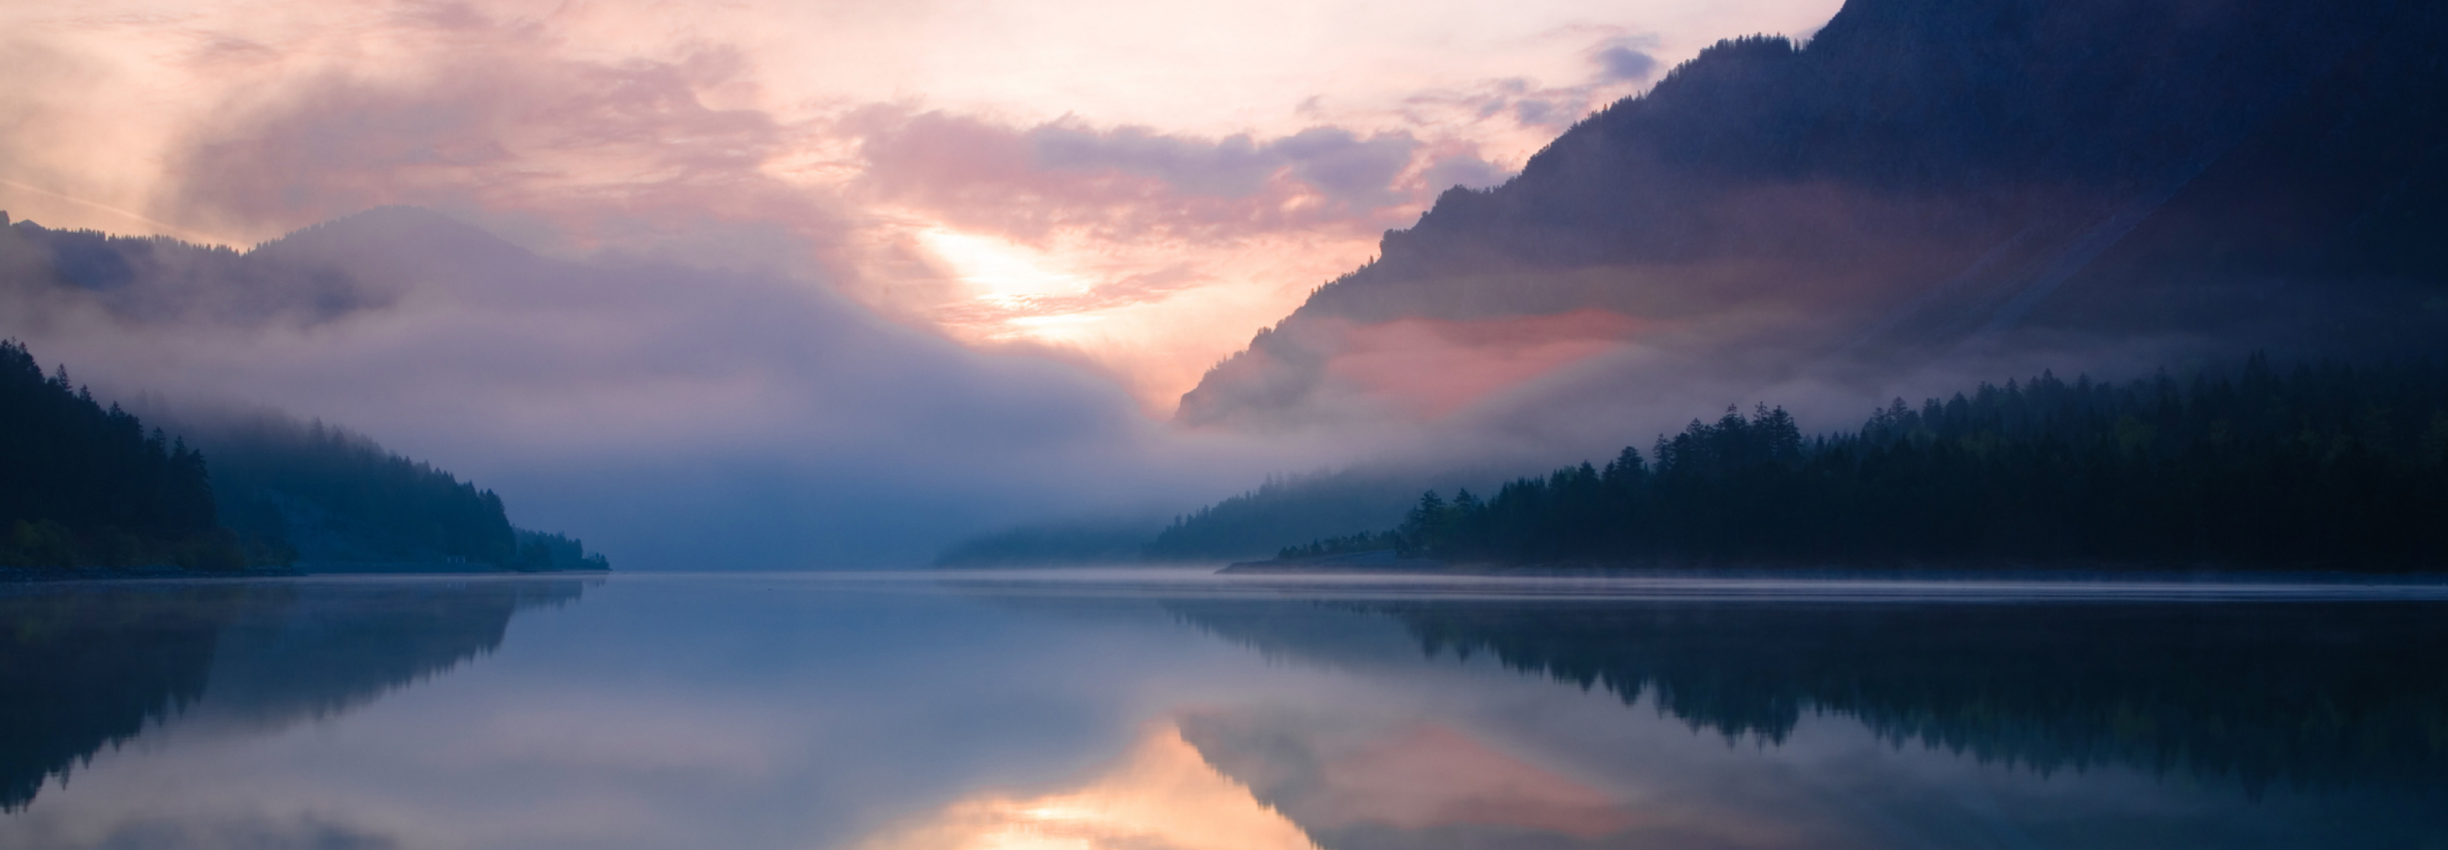 Mist over a mountain lake at sunrise